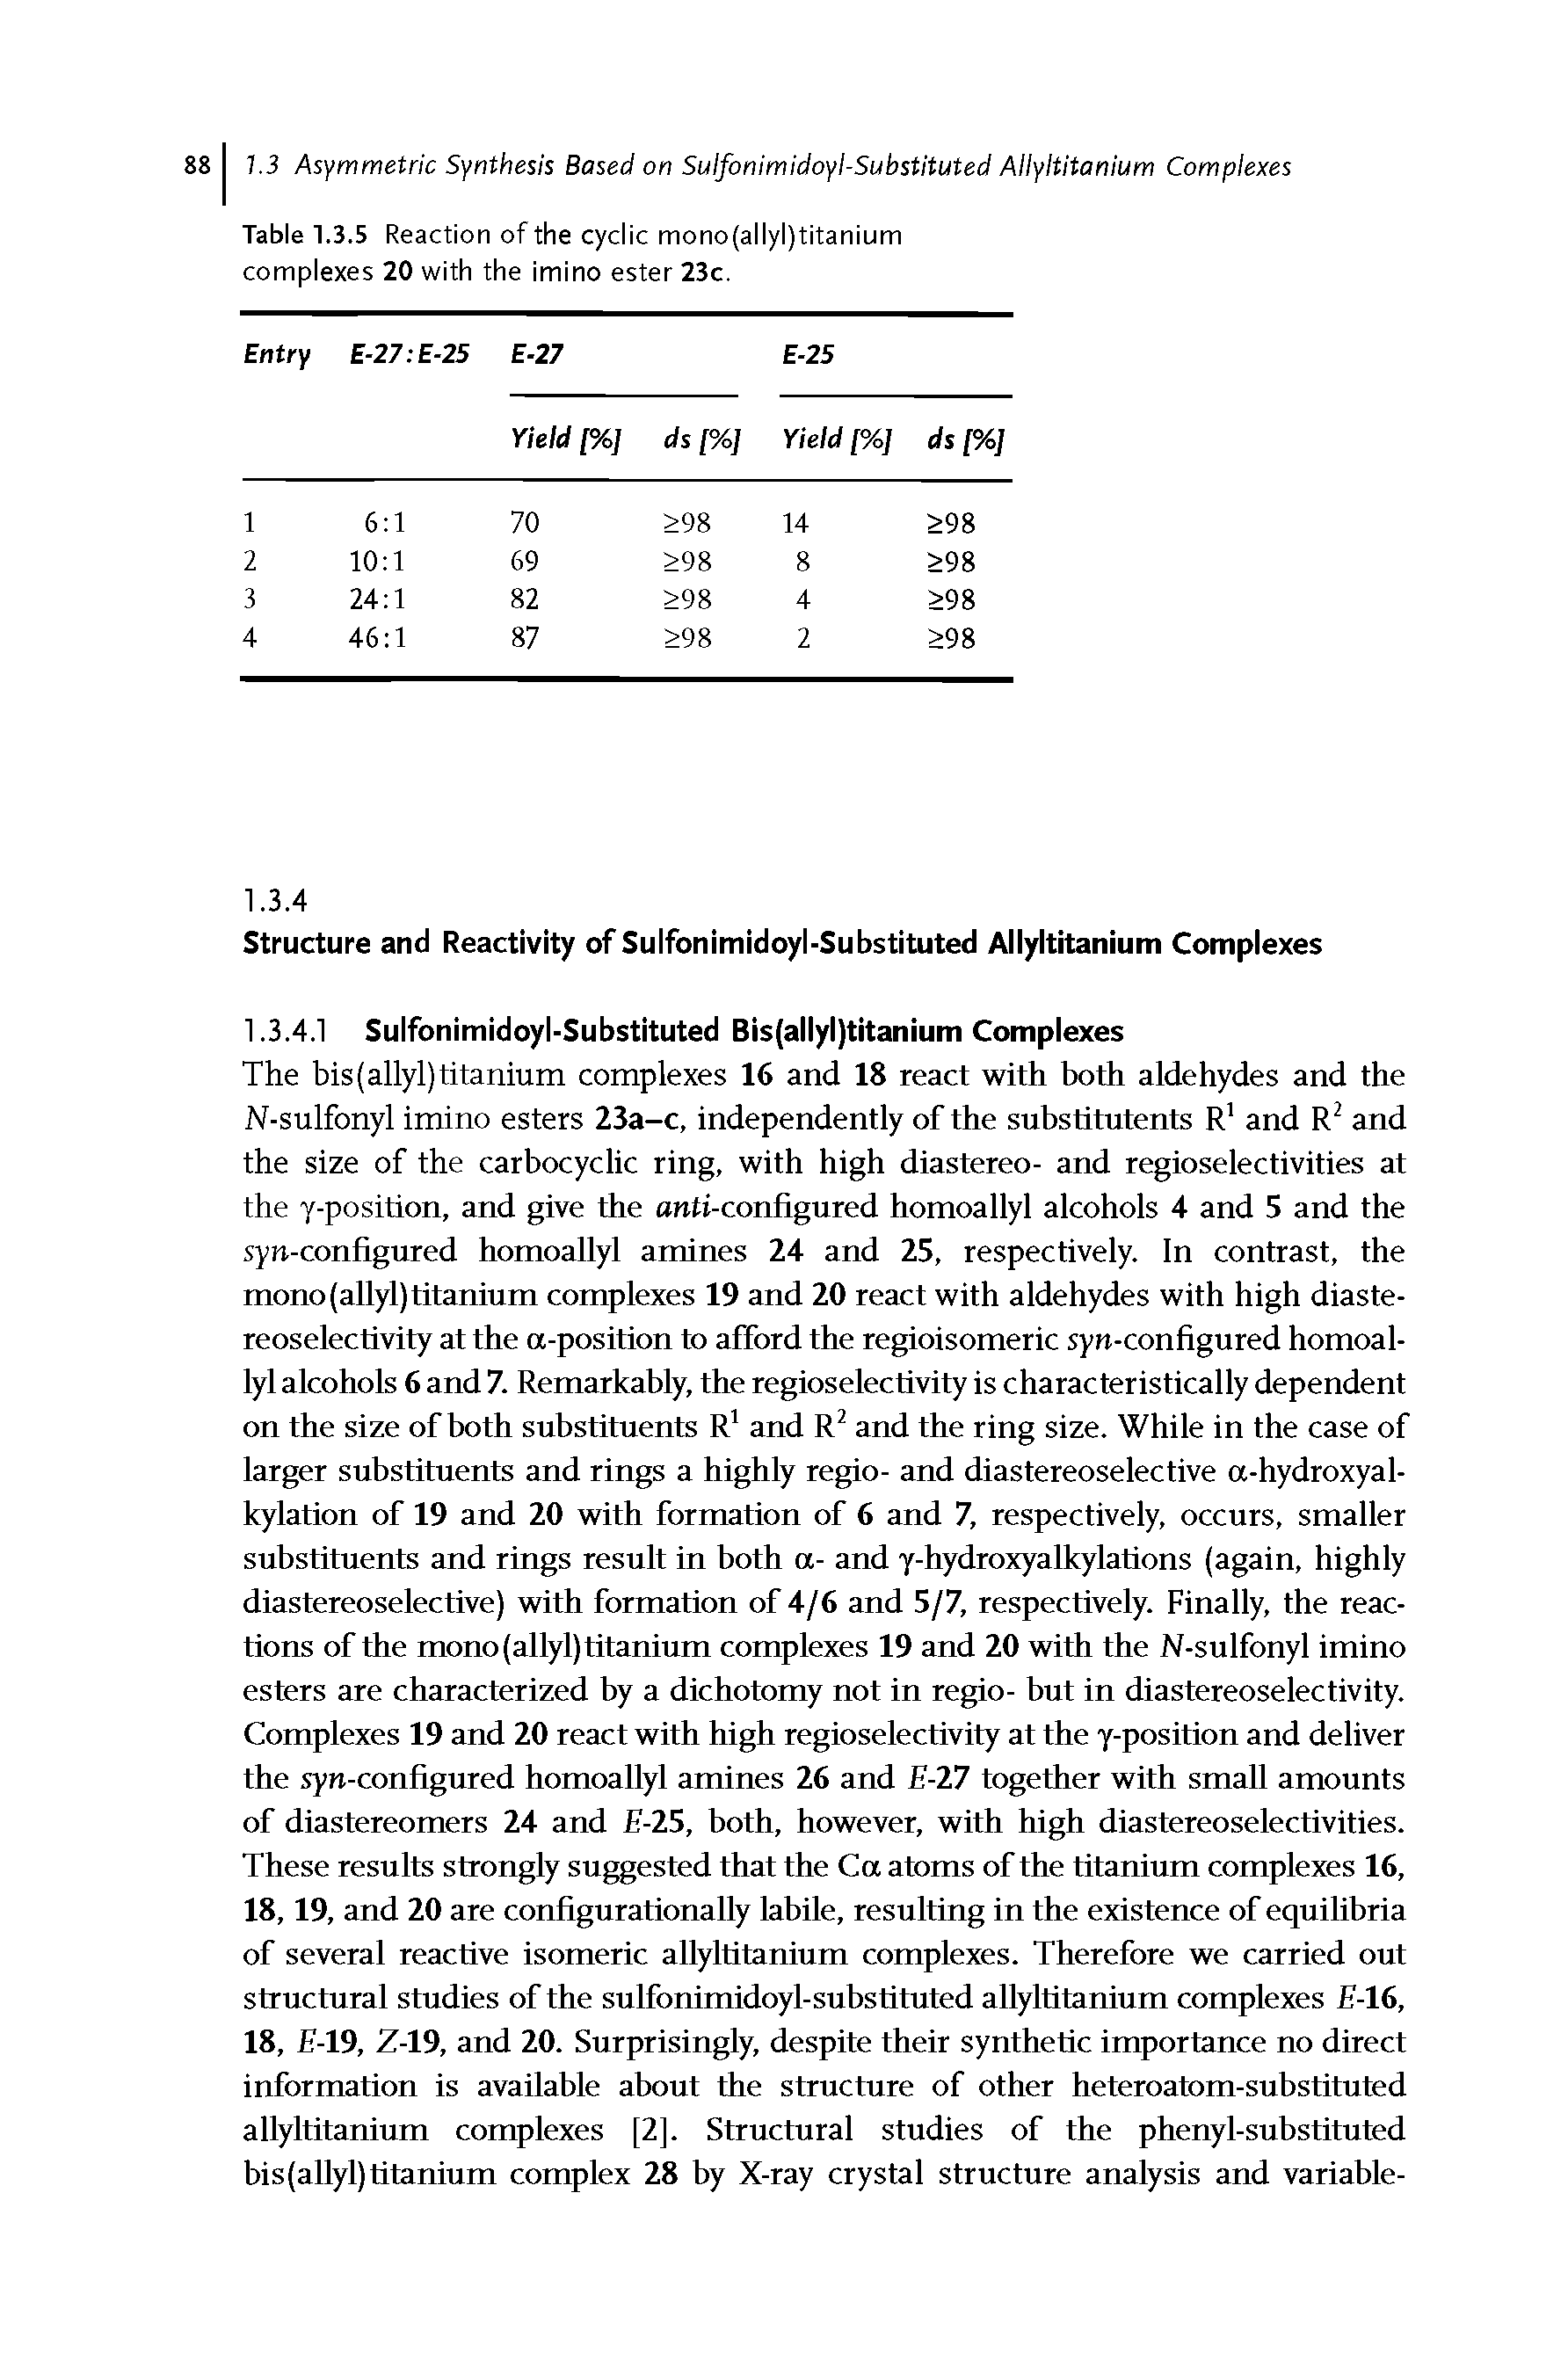 Table 1.3.5 Reaction of the cyclic mono(allyl)titanium complexes 20 with the imino ester 23c.